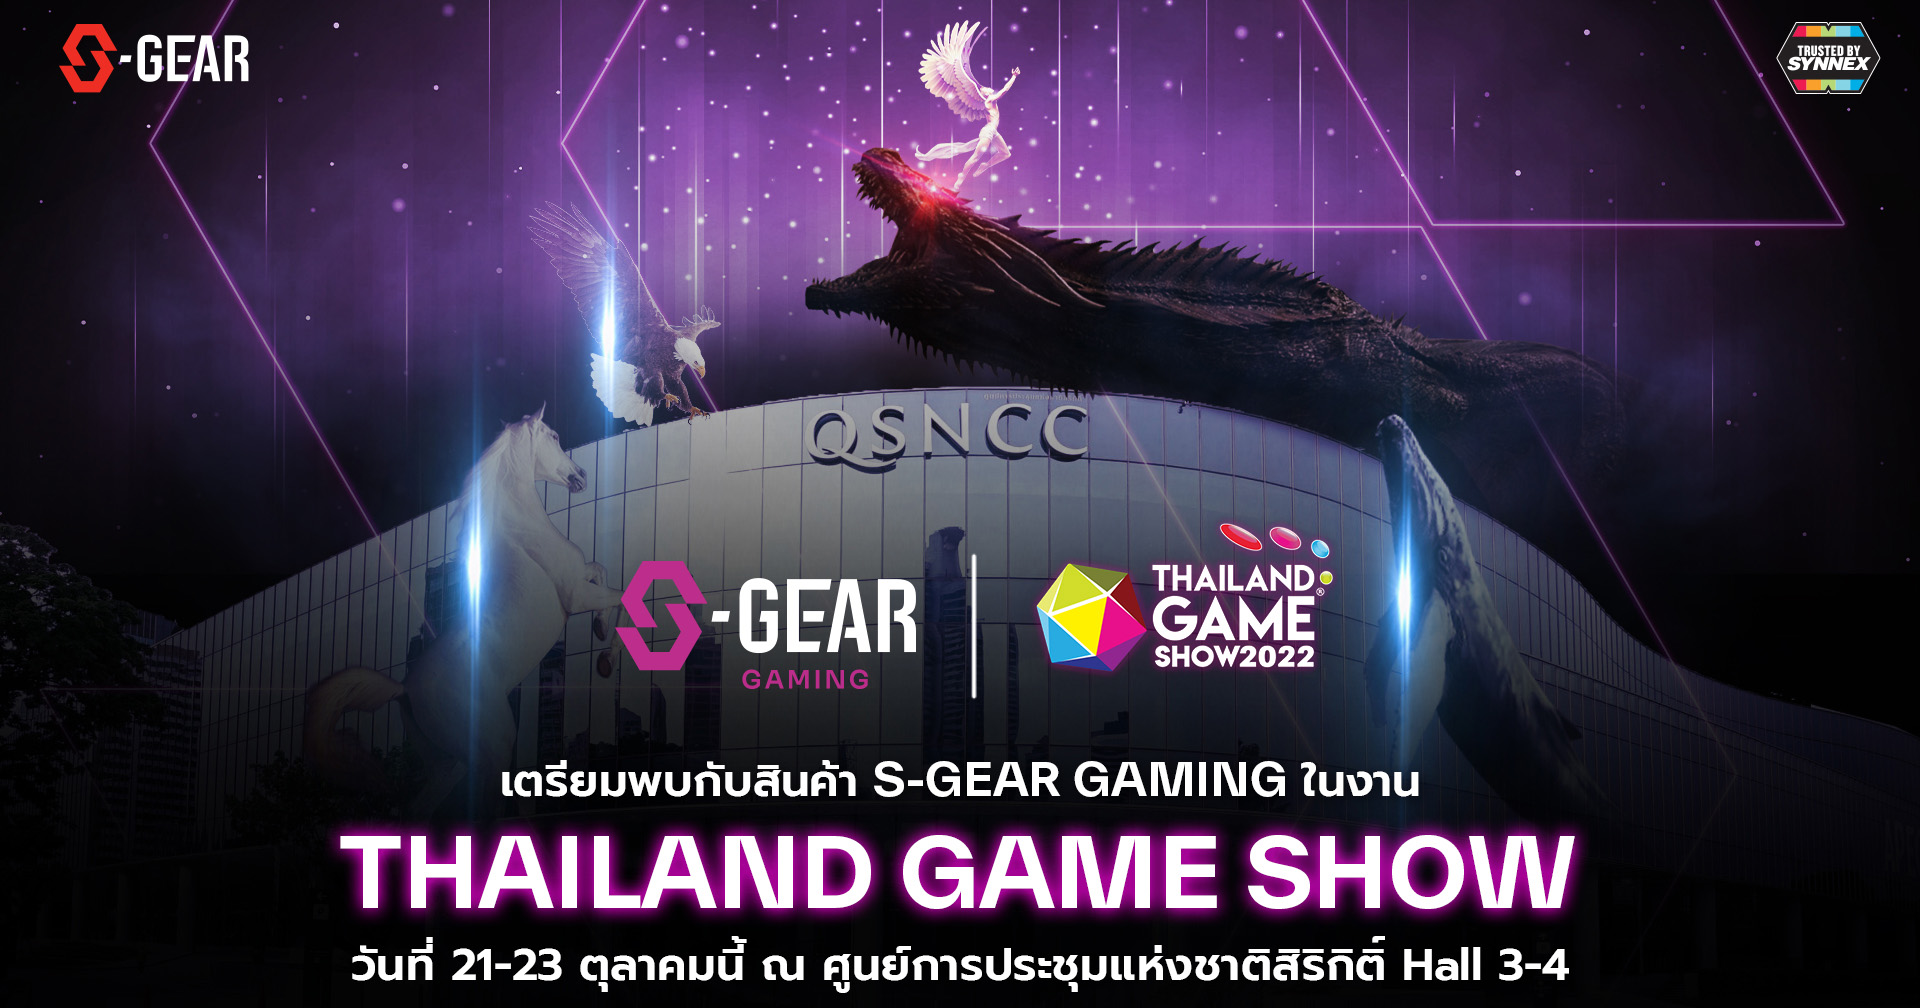 ‘S-GEAR’ เปิดตัวสินค้าสายเกมมิ่งซีรีส์แรก 6 รุ่น ภายใต้คอนเซ็ปท์ NEW REIGN OF GAMING START NOW!!!